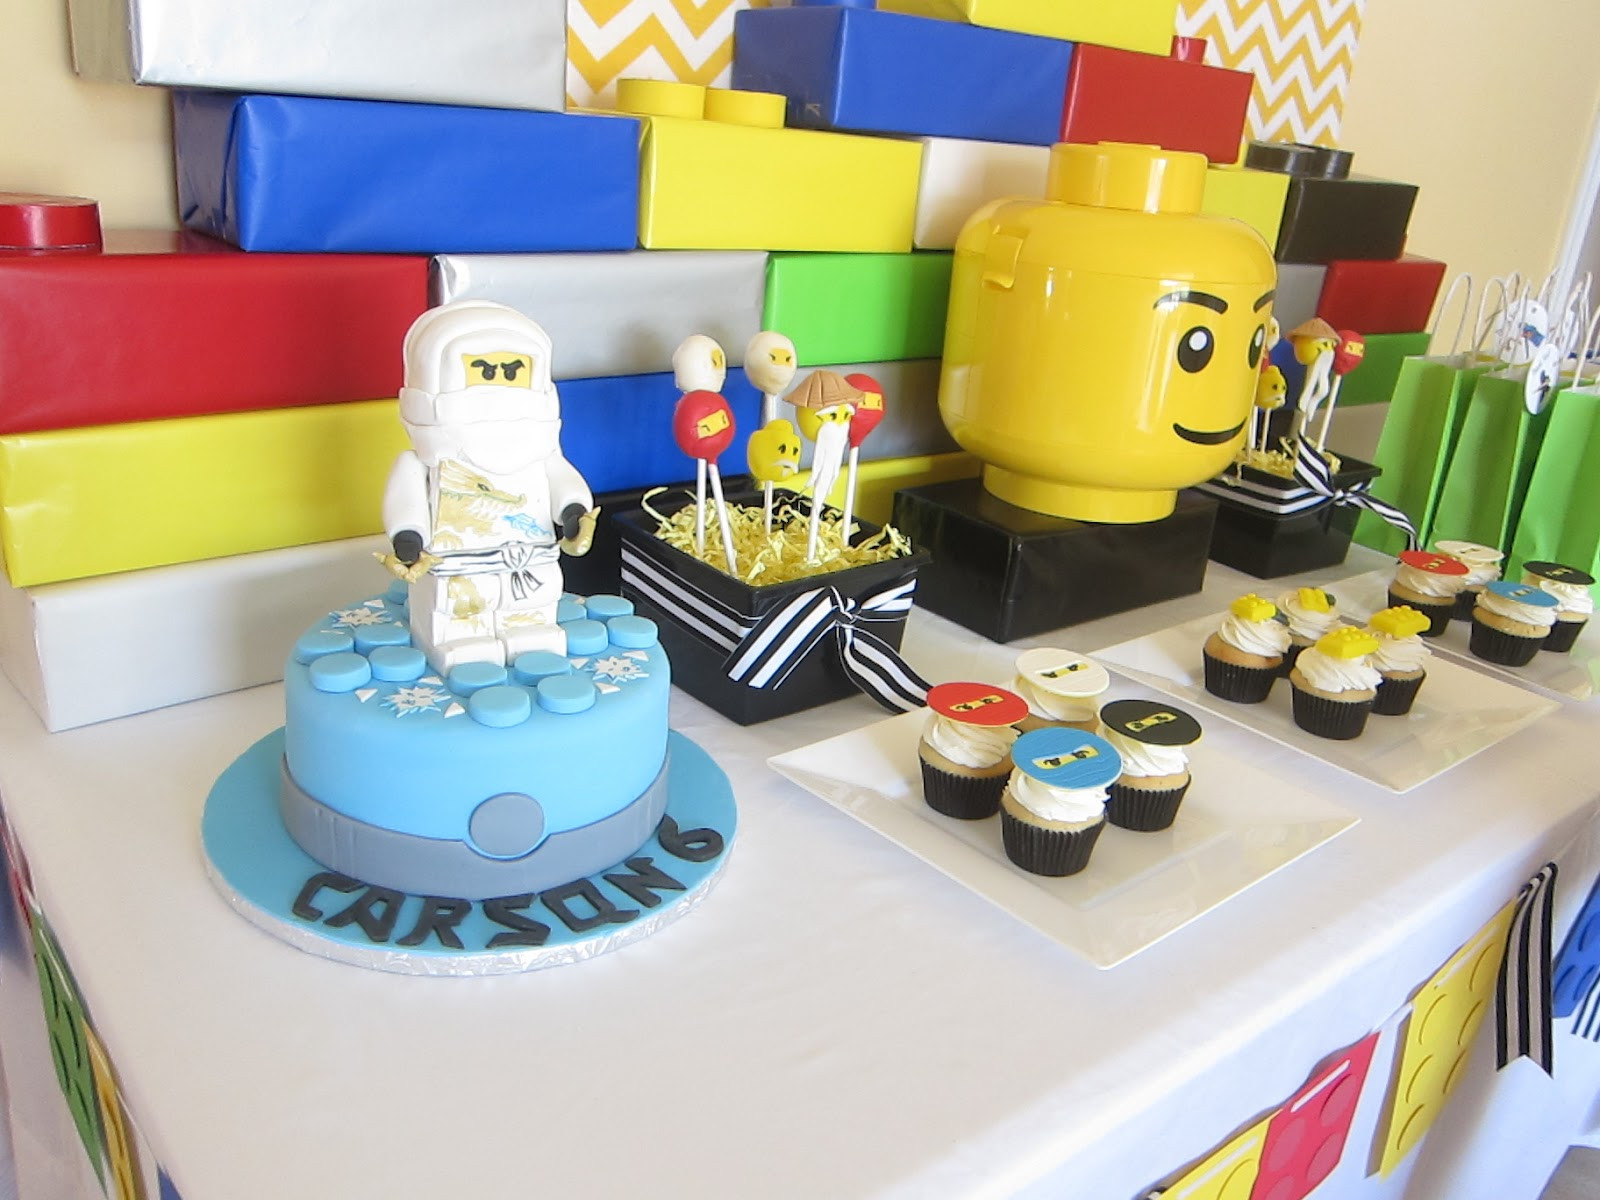 Lego Ninjago Birthday Party Supplies
 SimplyIced Party Details Lego Ninjago Birthday Party